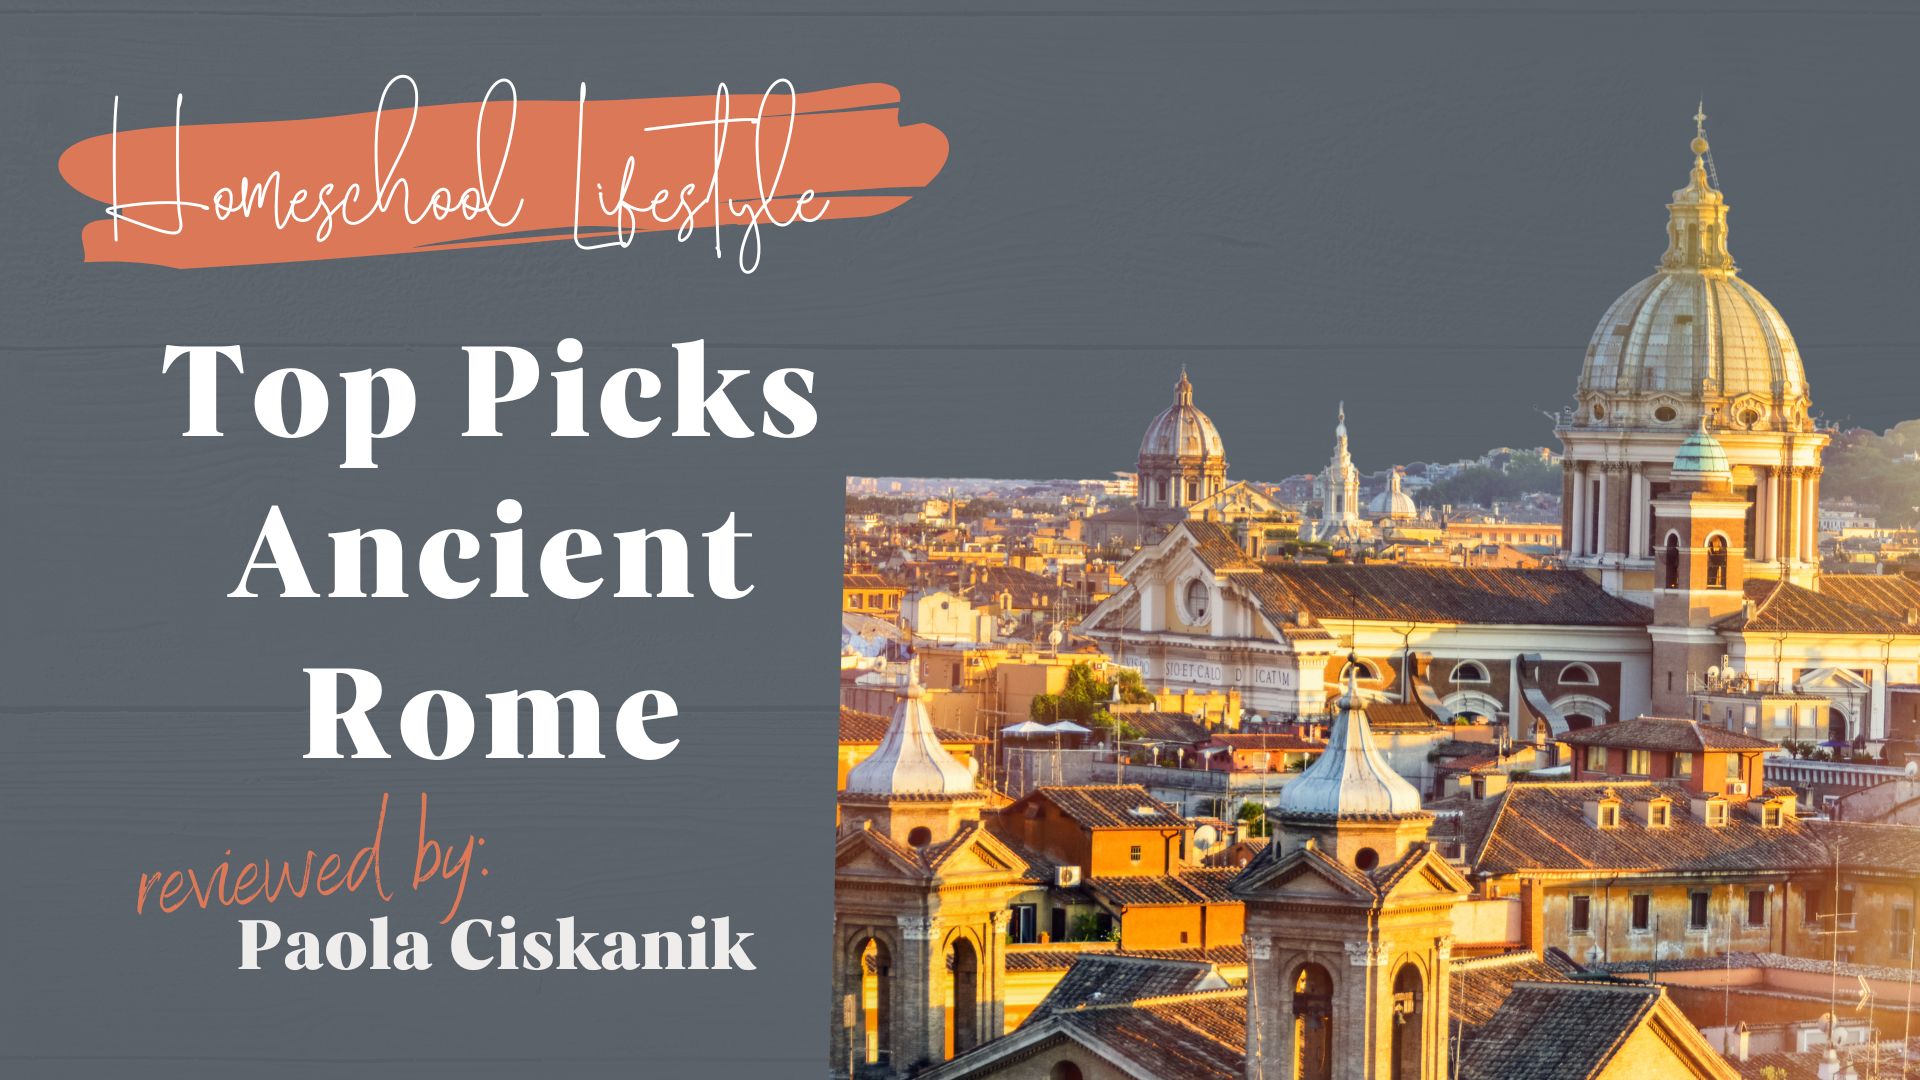 Top Picks Ancient Rome